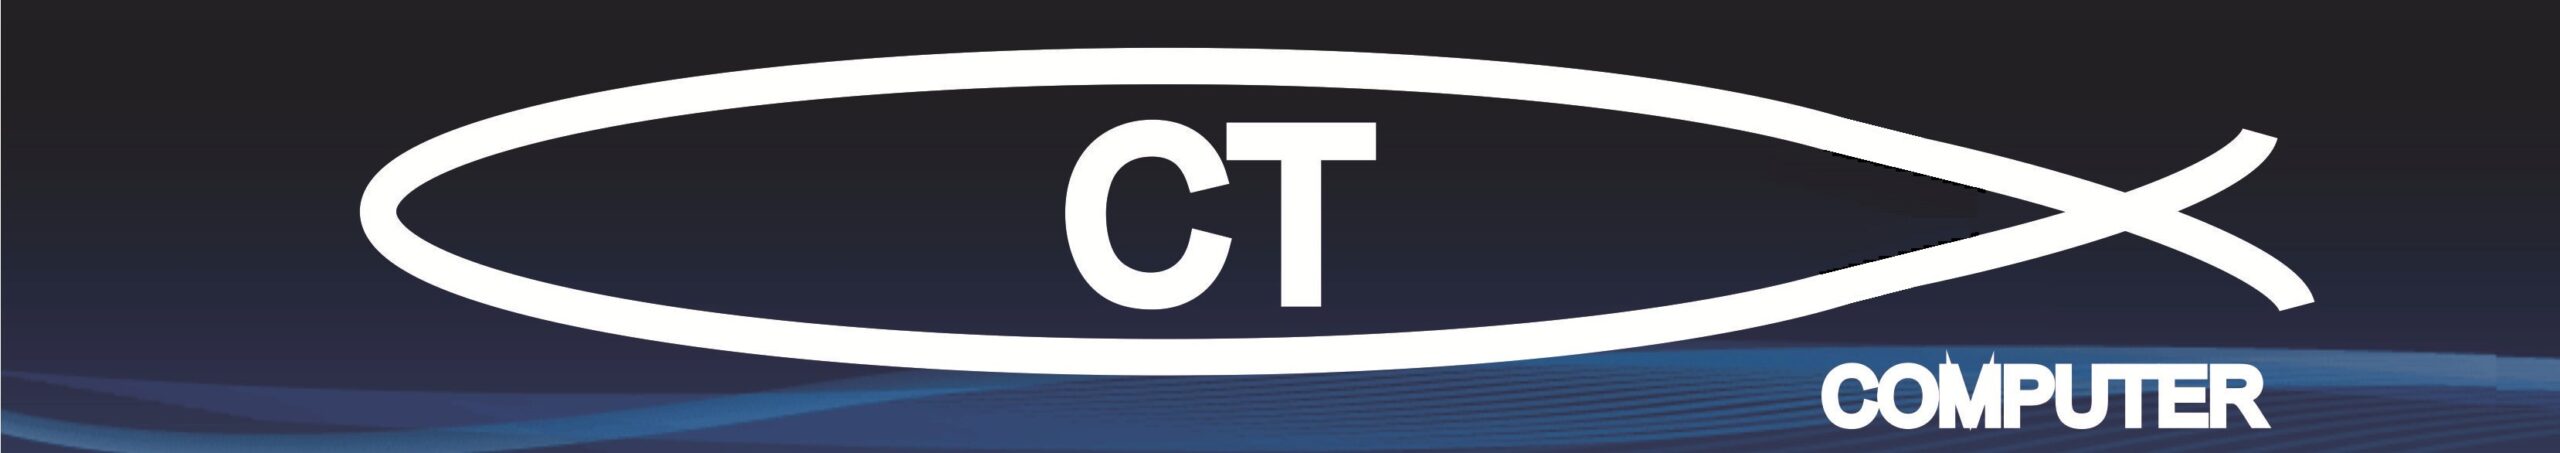 CT Computer logo